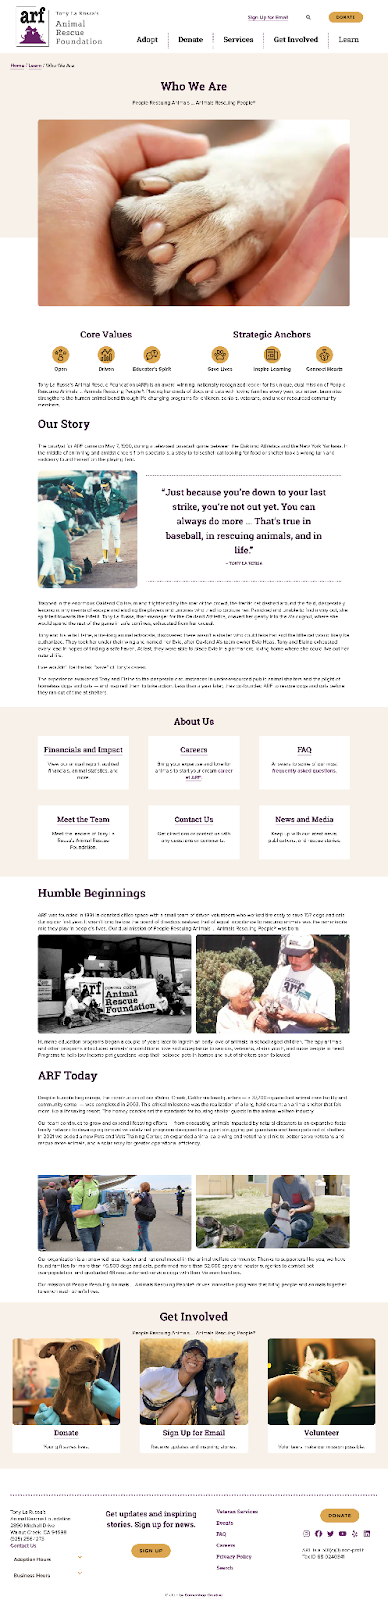 Tony La Russa's Animal Foundation homepage